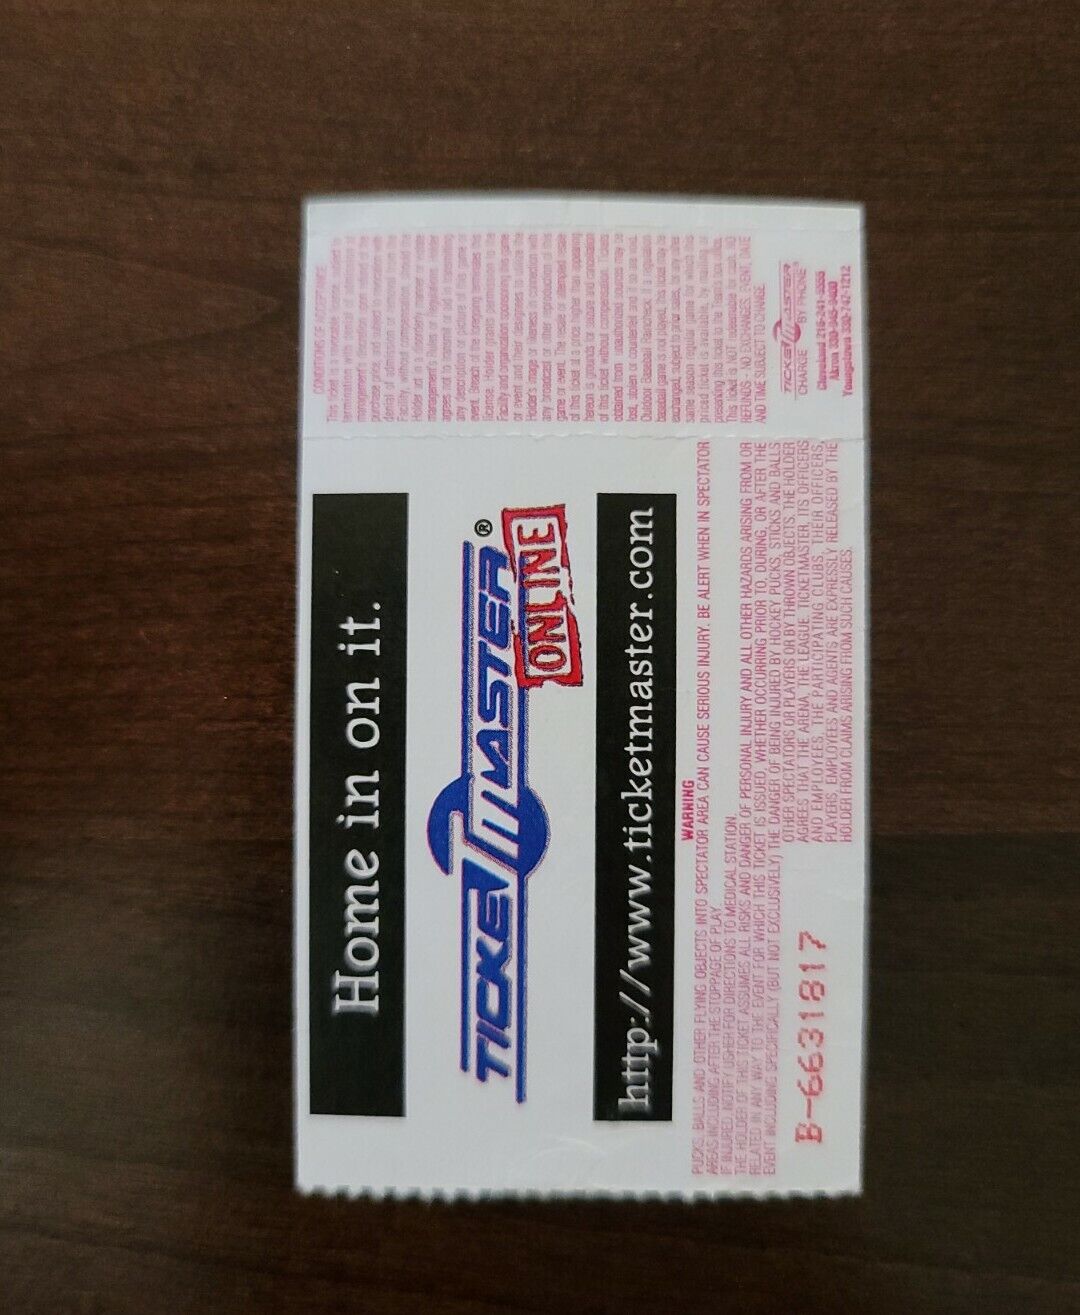 Rolling Stones 1999, Cleveland Gund Arena Original Concert Ticket Stub